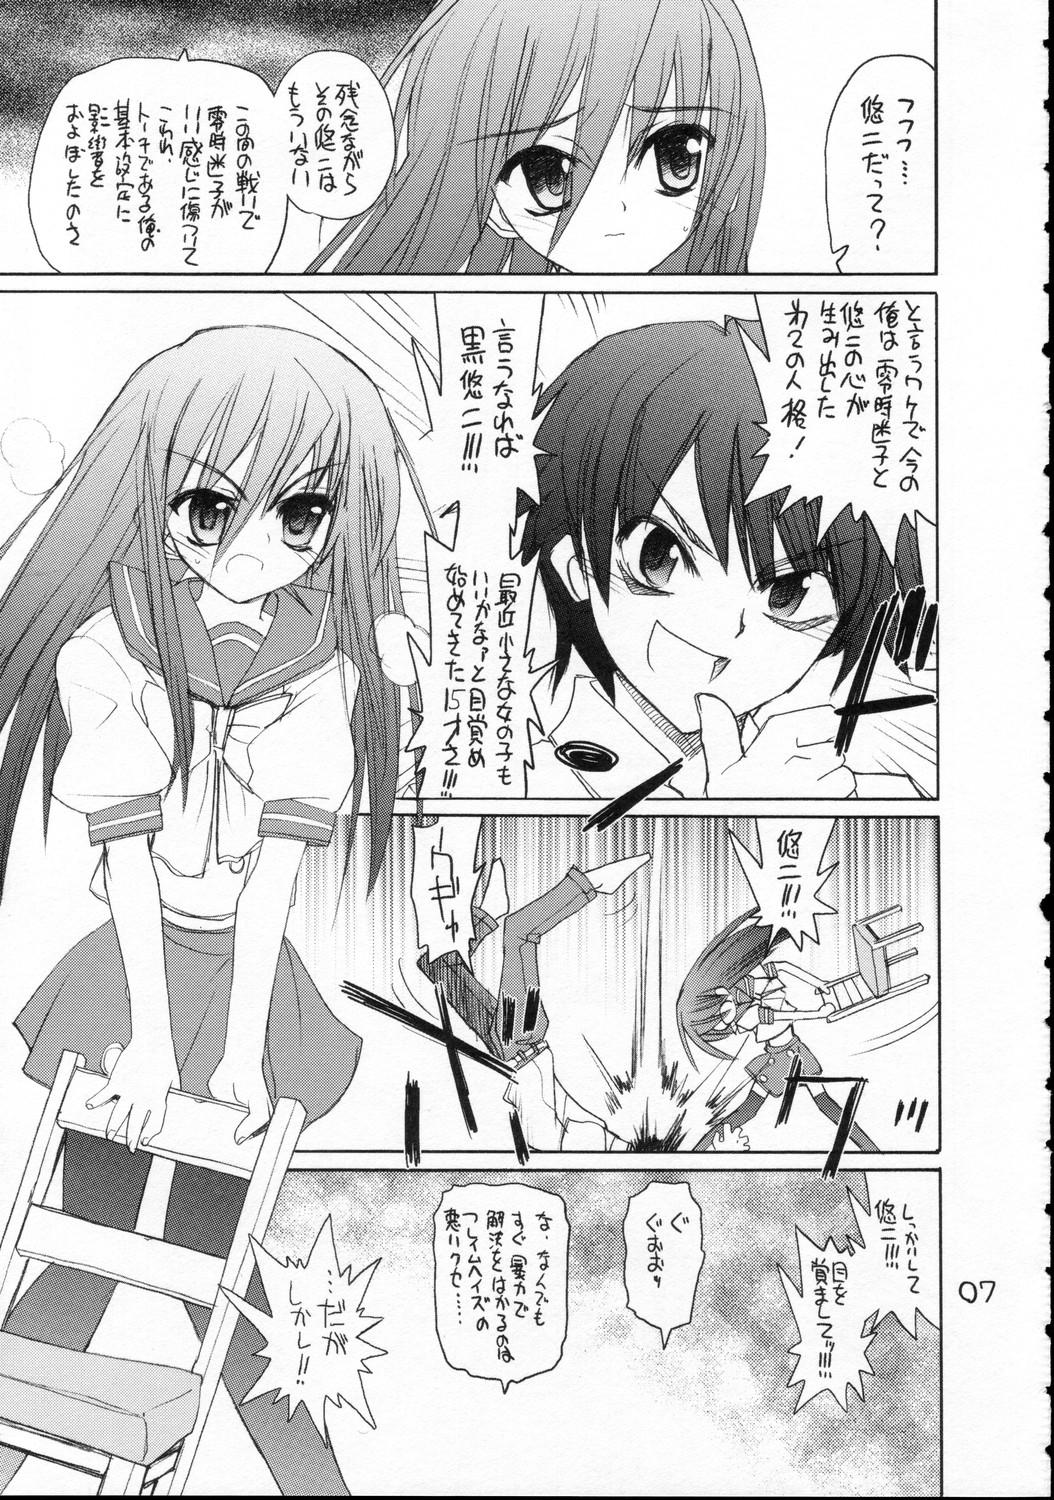 Bubblebutt Urusai - annoying annoying annoying - Shakugan no shana Athletic - Page 6